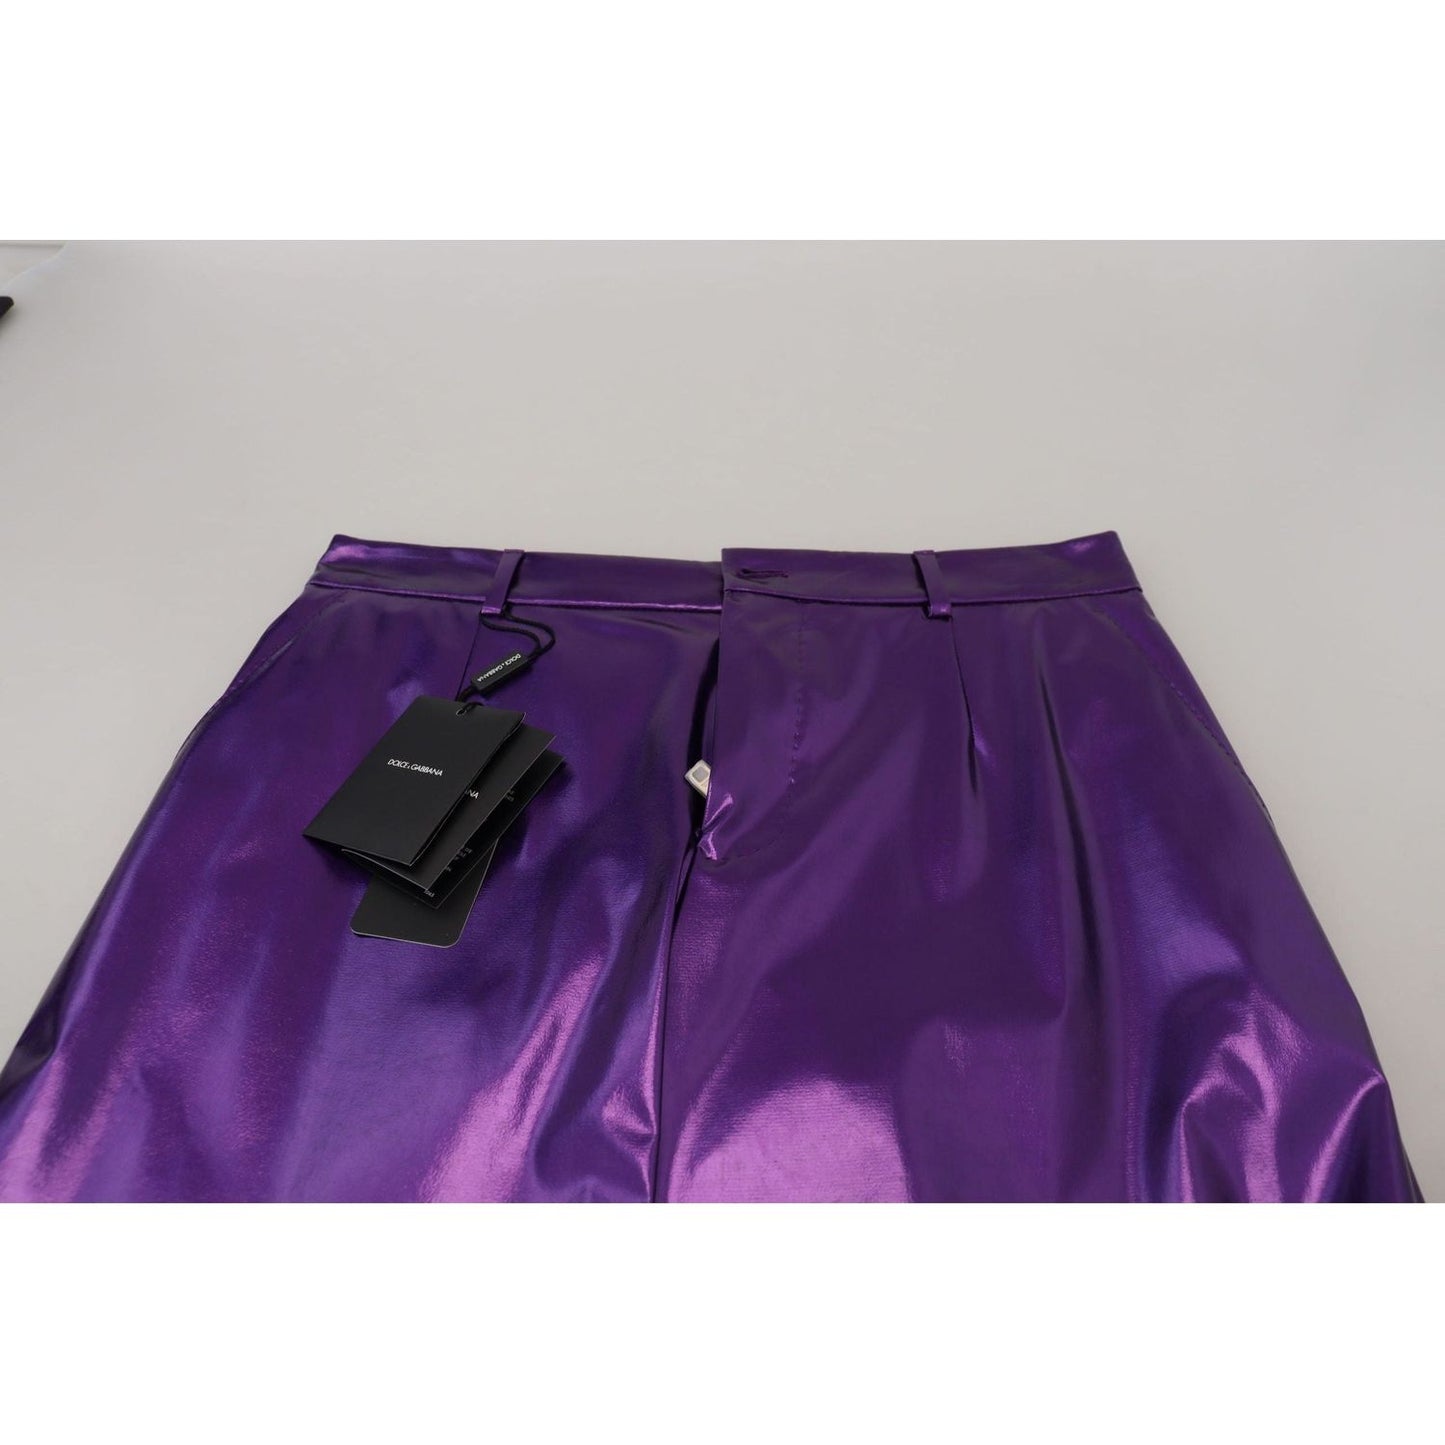 Dolce & Gabbana Elegant Shining Purple Straight Fit Pants purple-shining-men-casual-pants-1